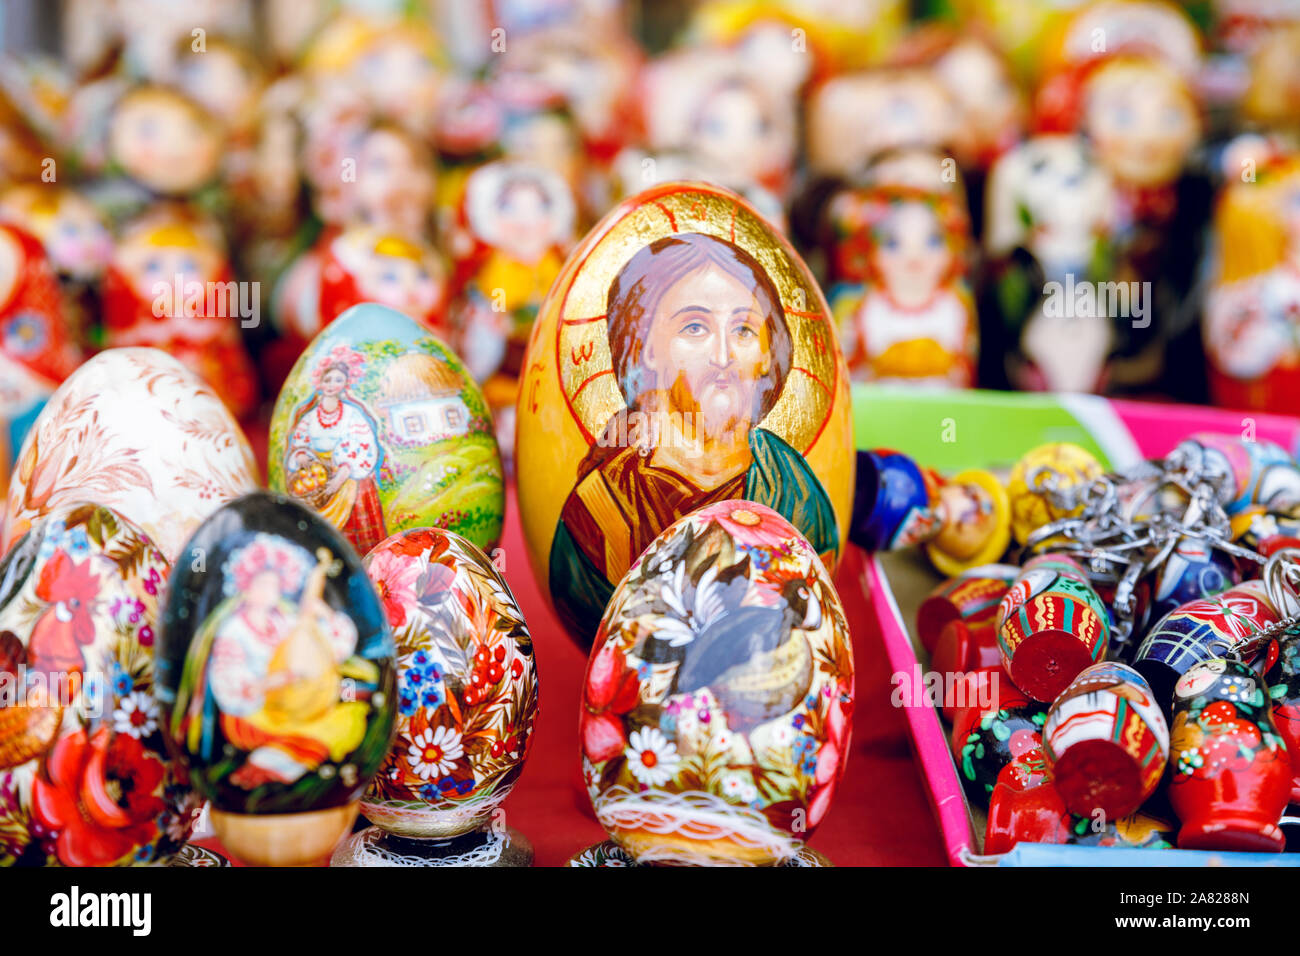 Holz- Verschachtelung Puppen oder russischen Matrjoschka Puppen zum Verkauf in St. Petersburg, Russland Stockfoto